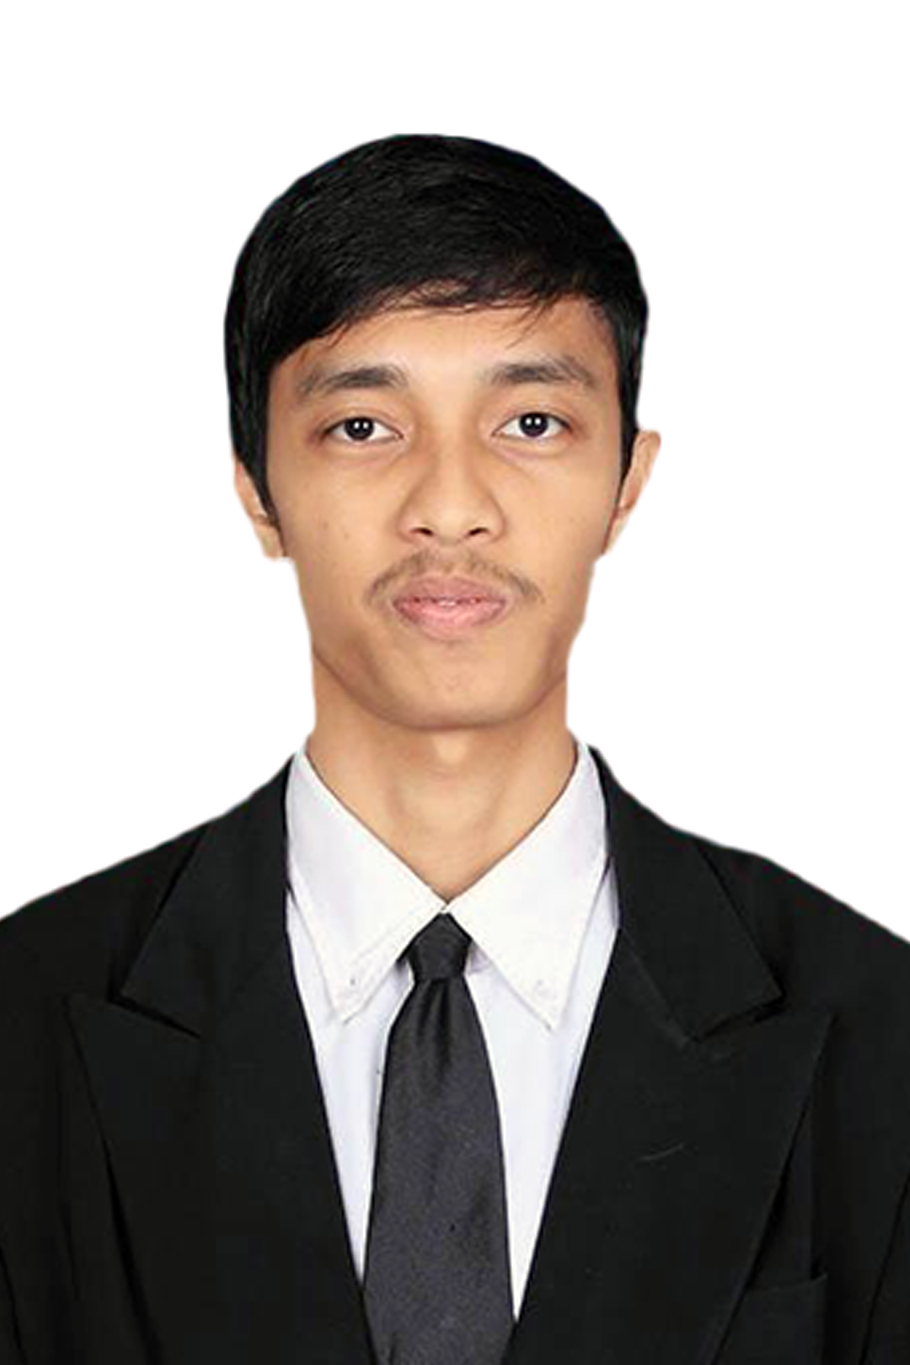 foto profile Maulana Andinata Dalimunthe, S.I.Kom., M.A.